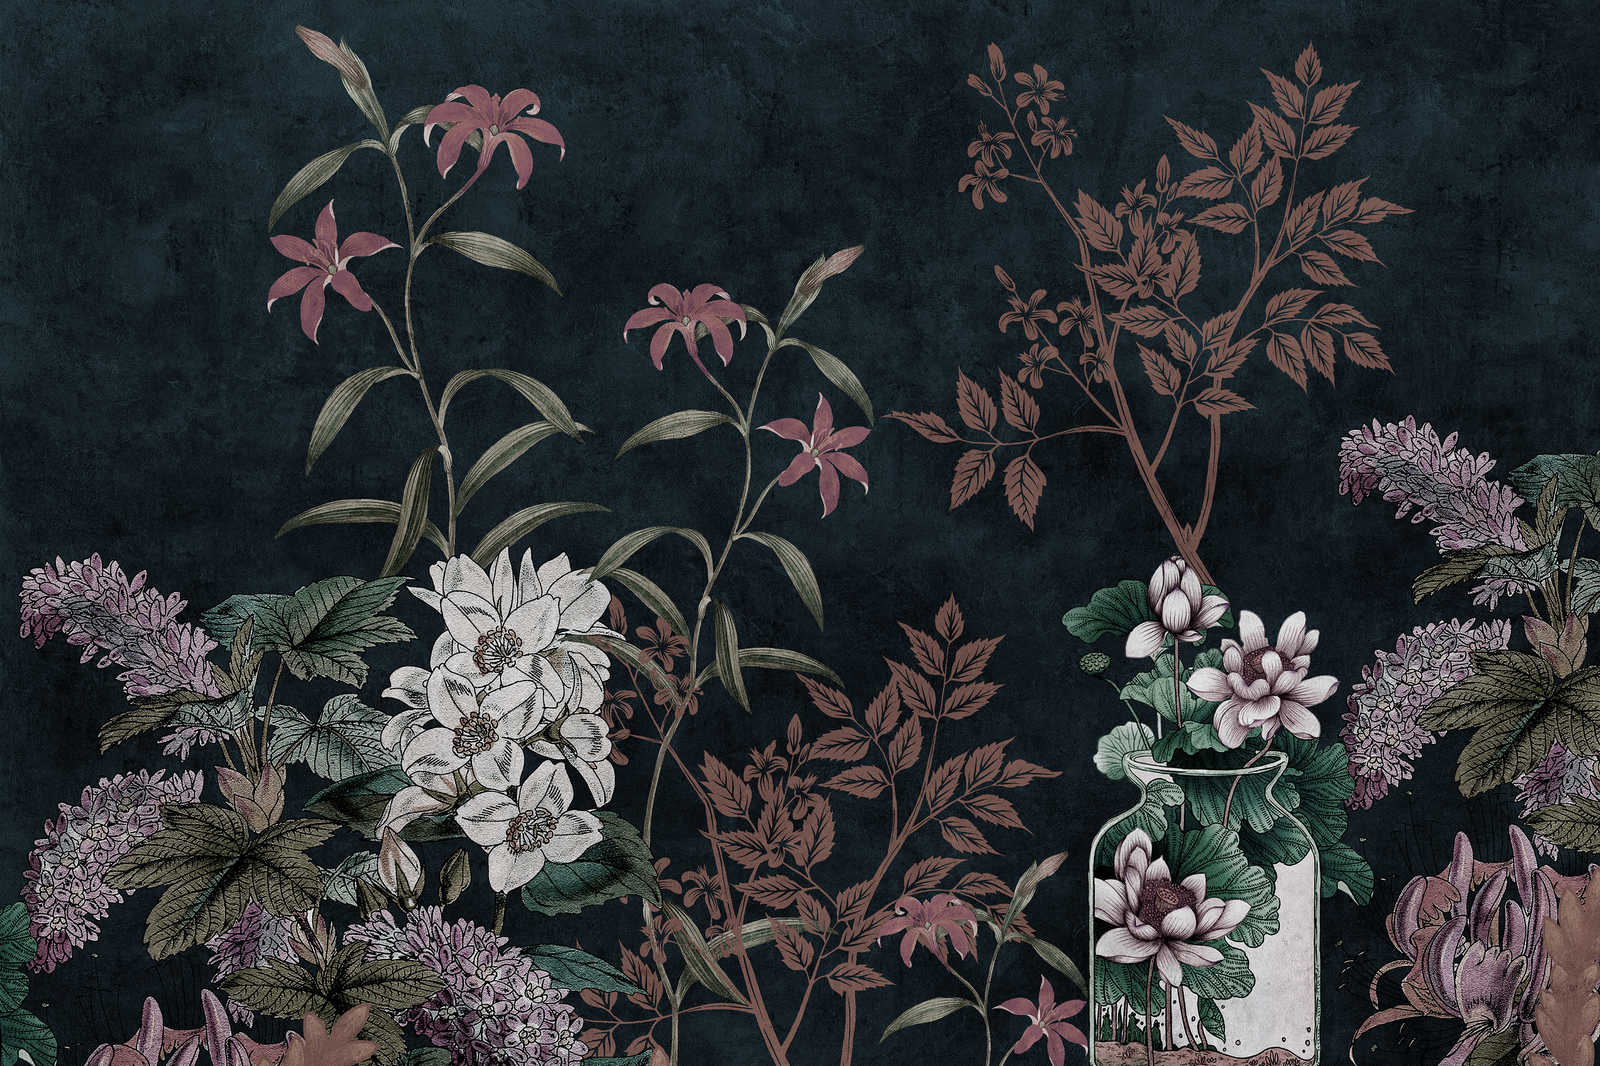             Dark Room 2 - Zwart Canvas Schilderij Botanisch Patroon Roze - 1.20 m x 0.80 m
        